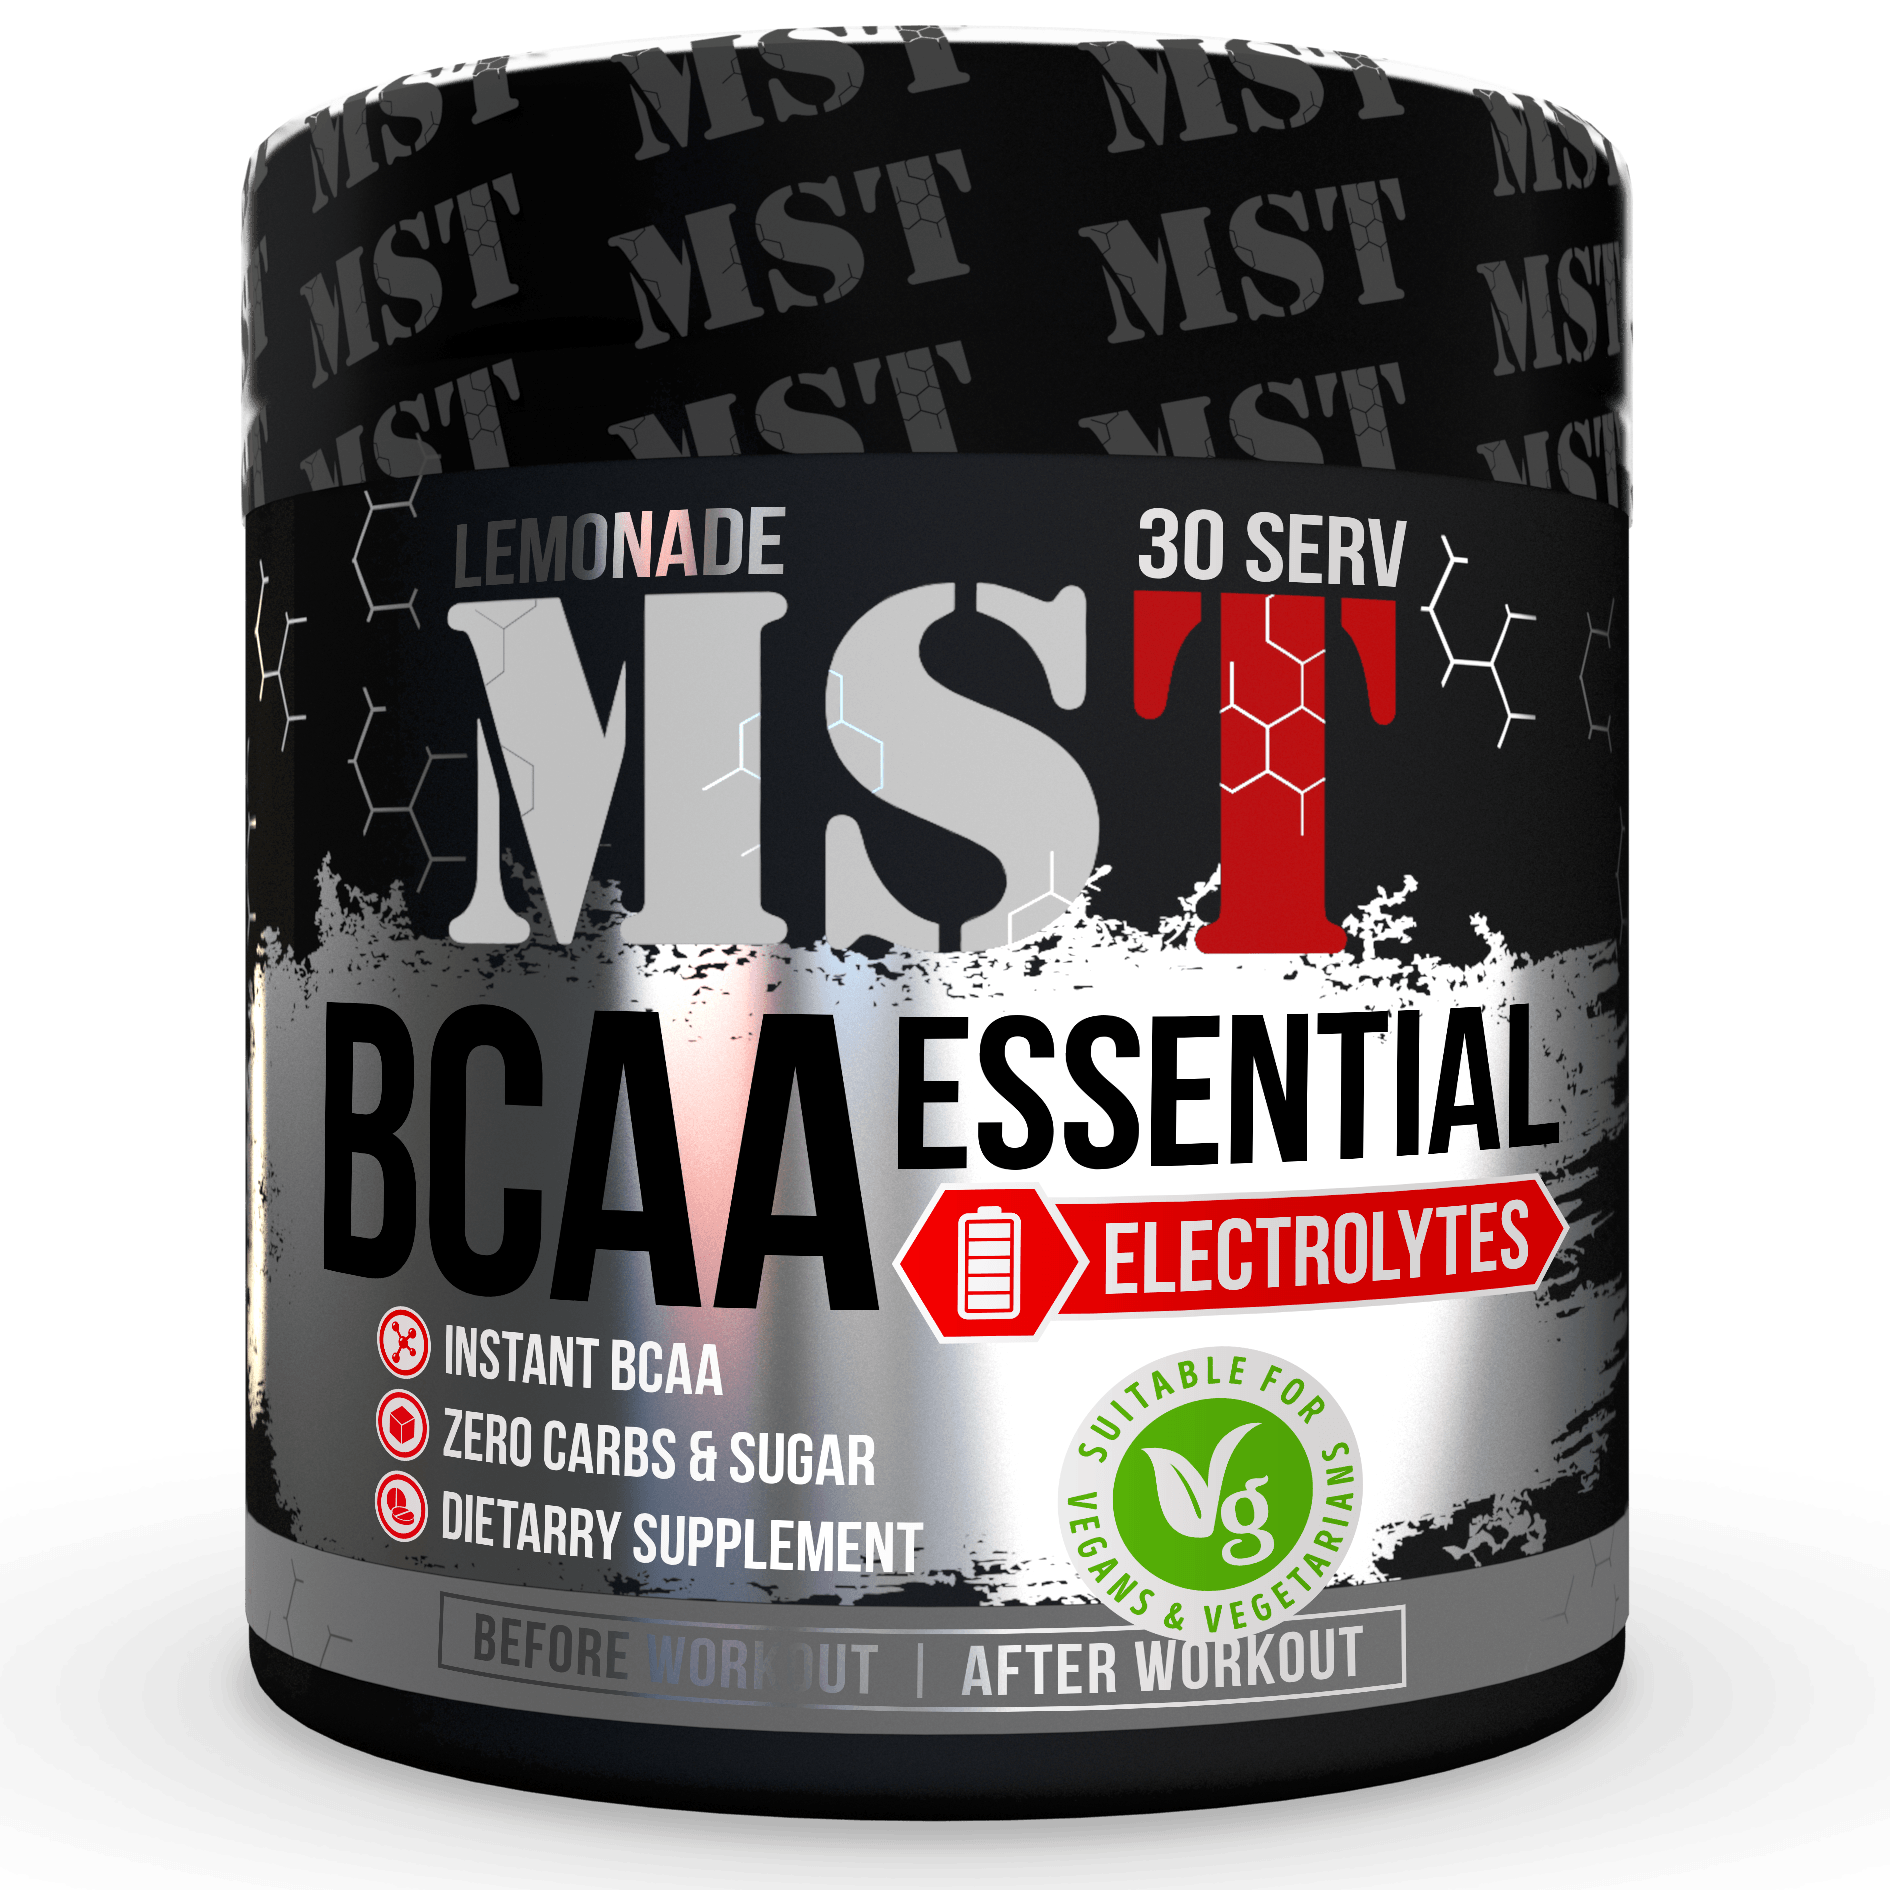 BCAA Essential Electrolytes, 240 g, MST Nutrition. BCAA. Weight Loss स्वास्थ्य लाभ Anti-catabolic properties Lean muscle mass 